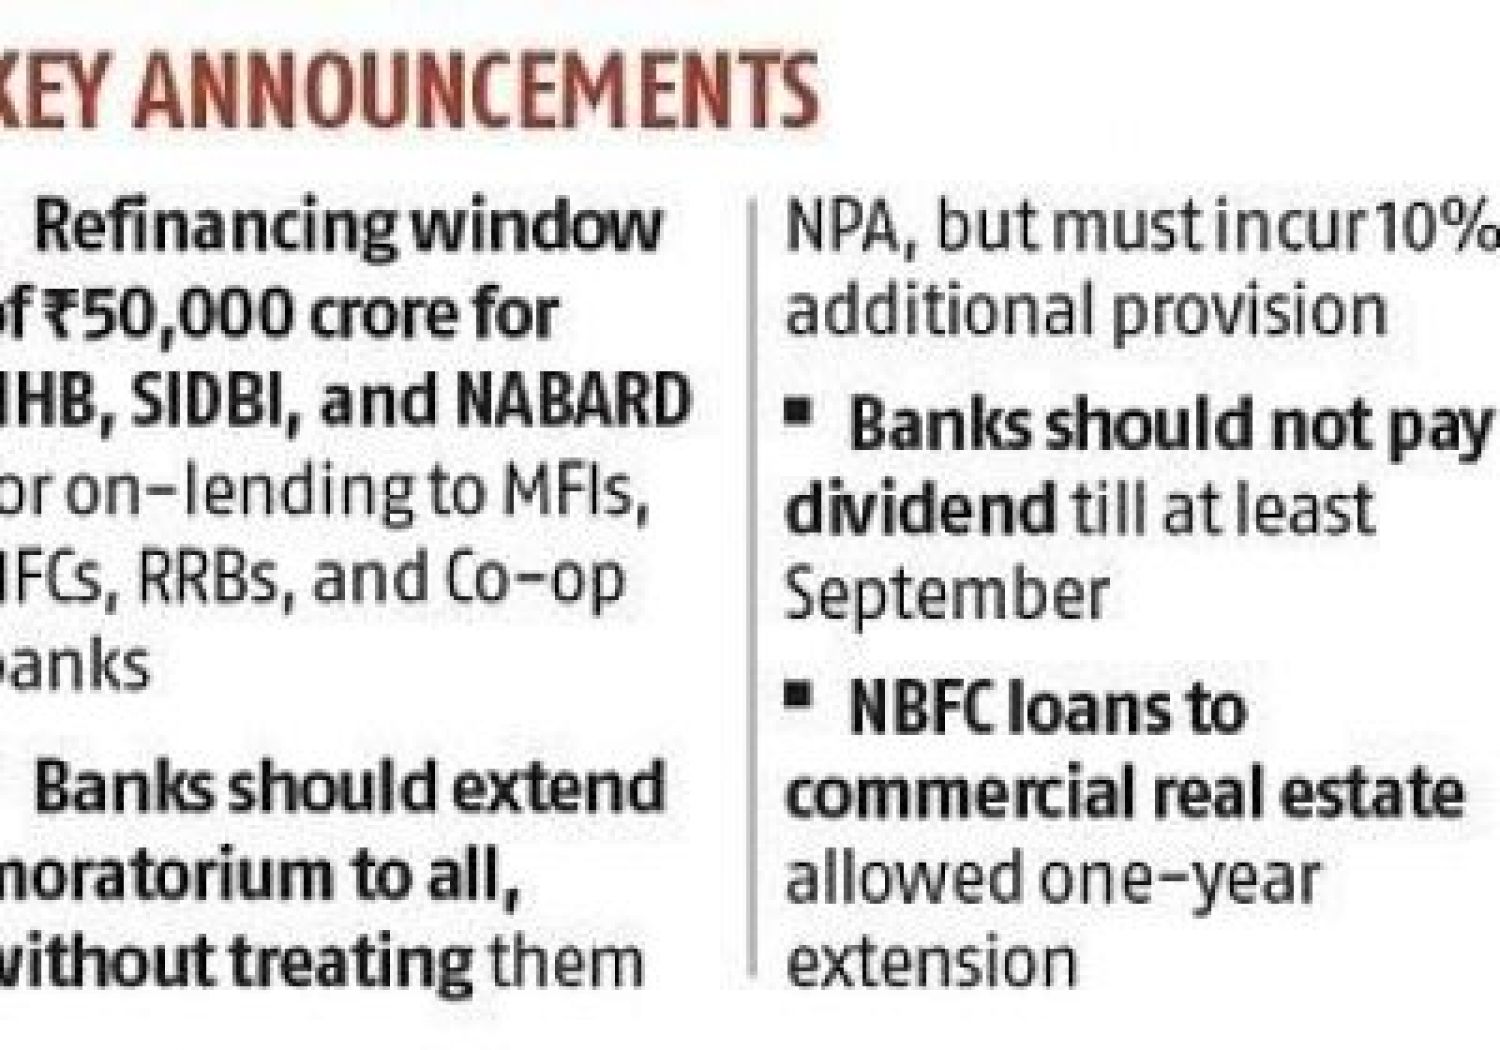 RBI Announced the refinancing of Rs 50,000 crore to SIDBI etc 